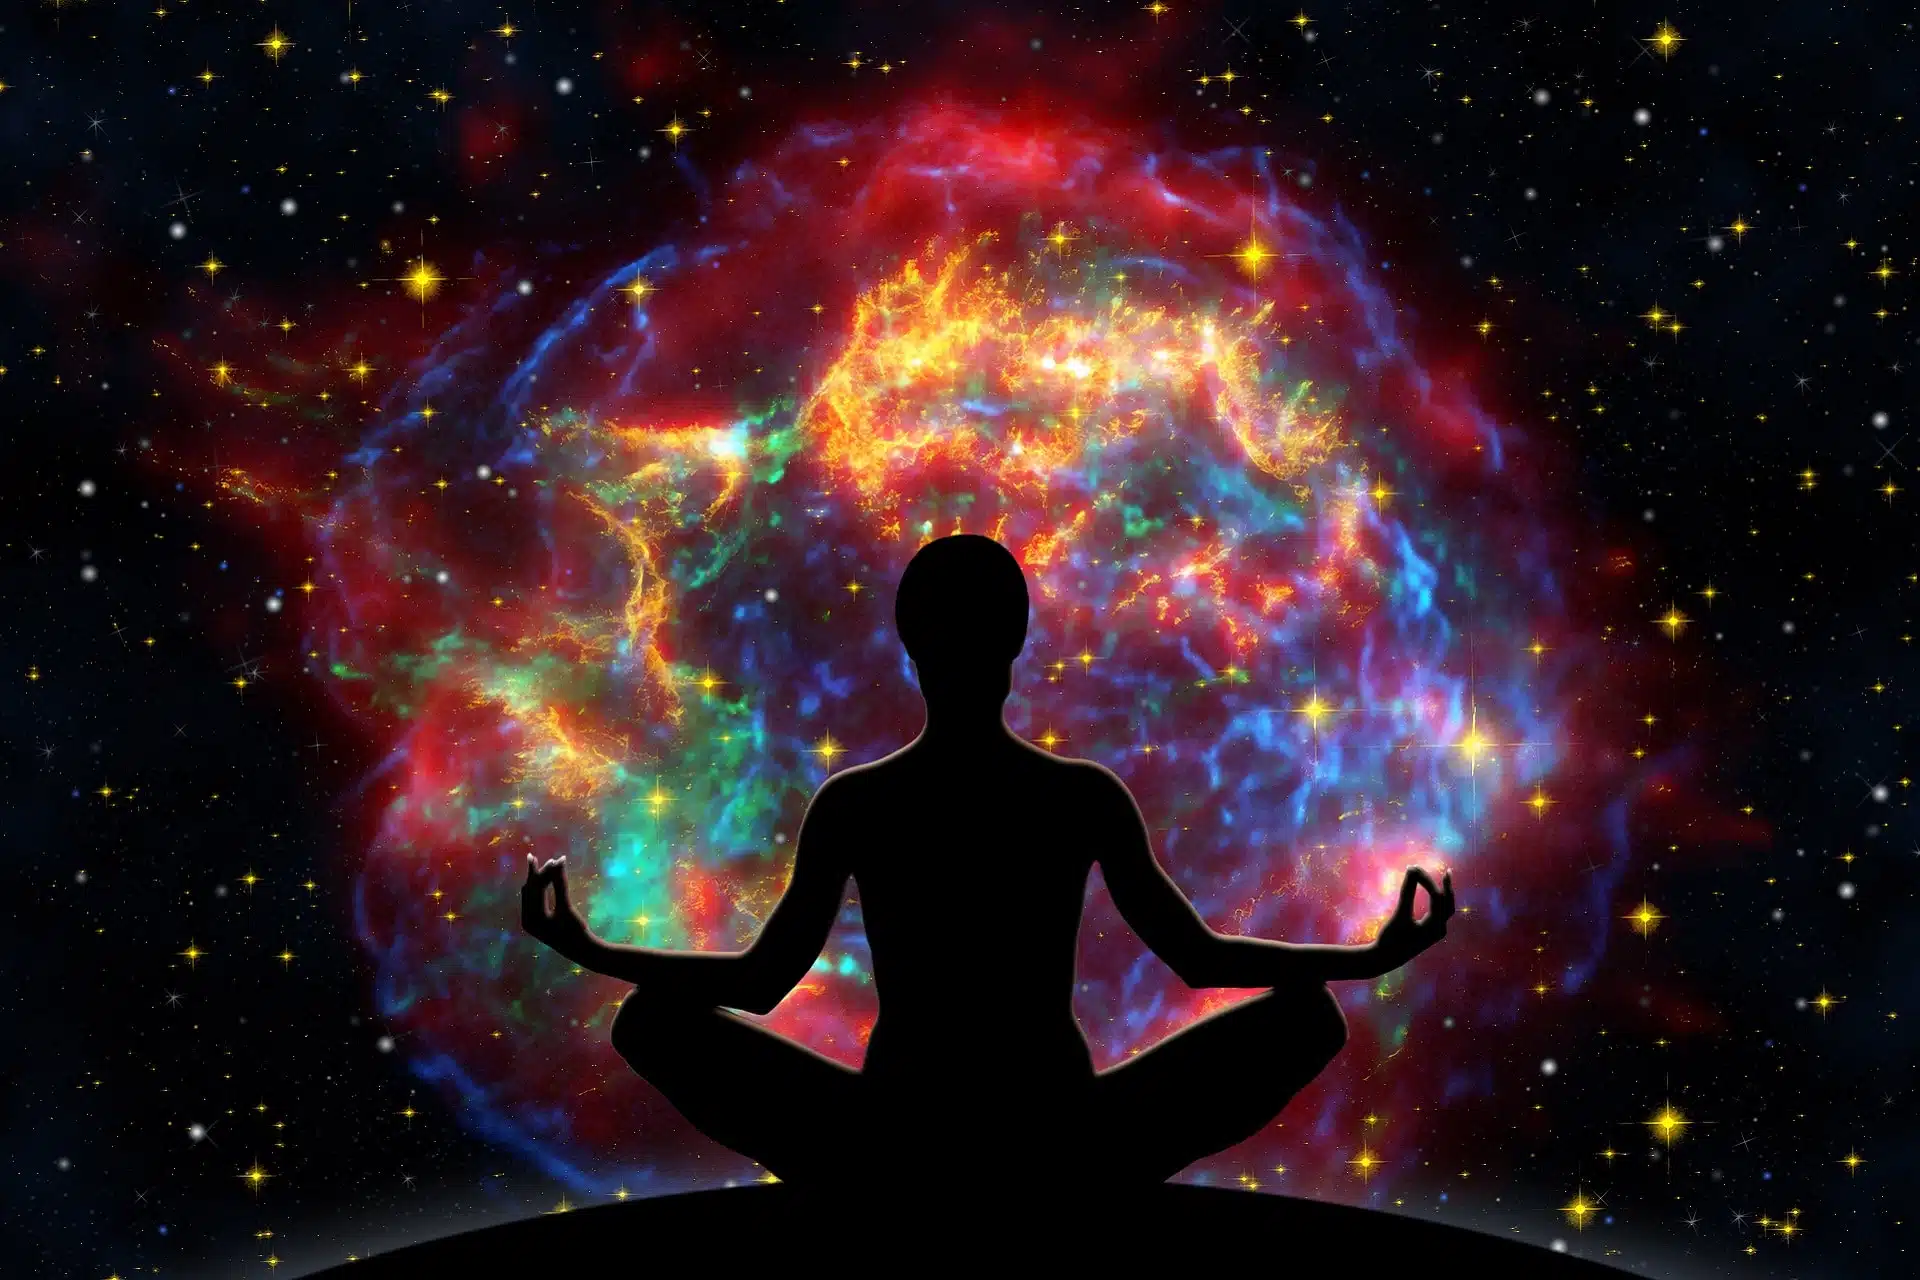 Female yoga figure against universe background with Supernova explosion.